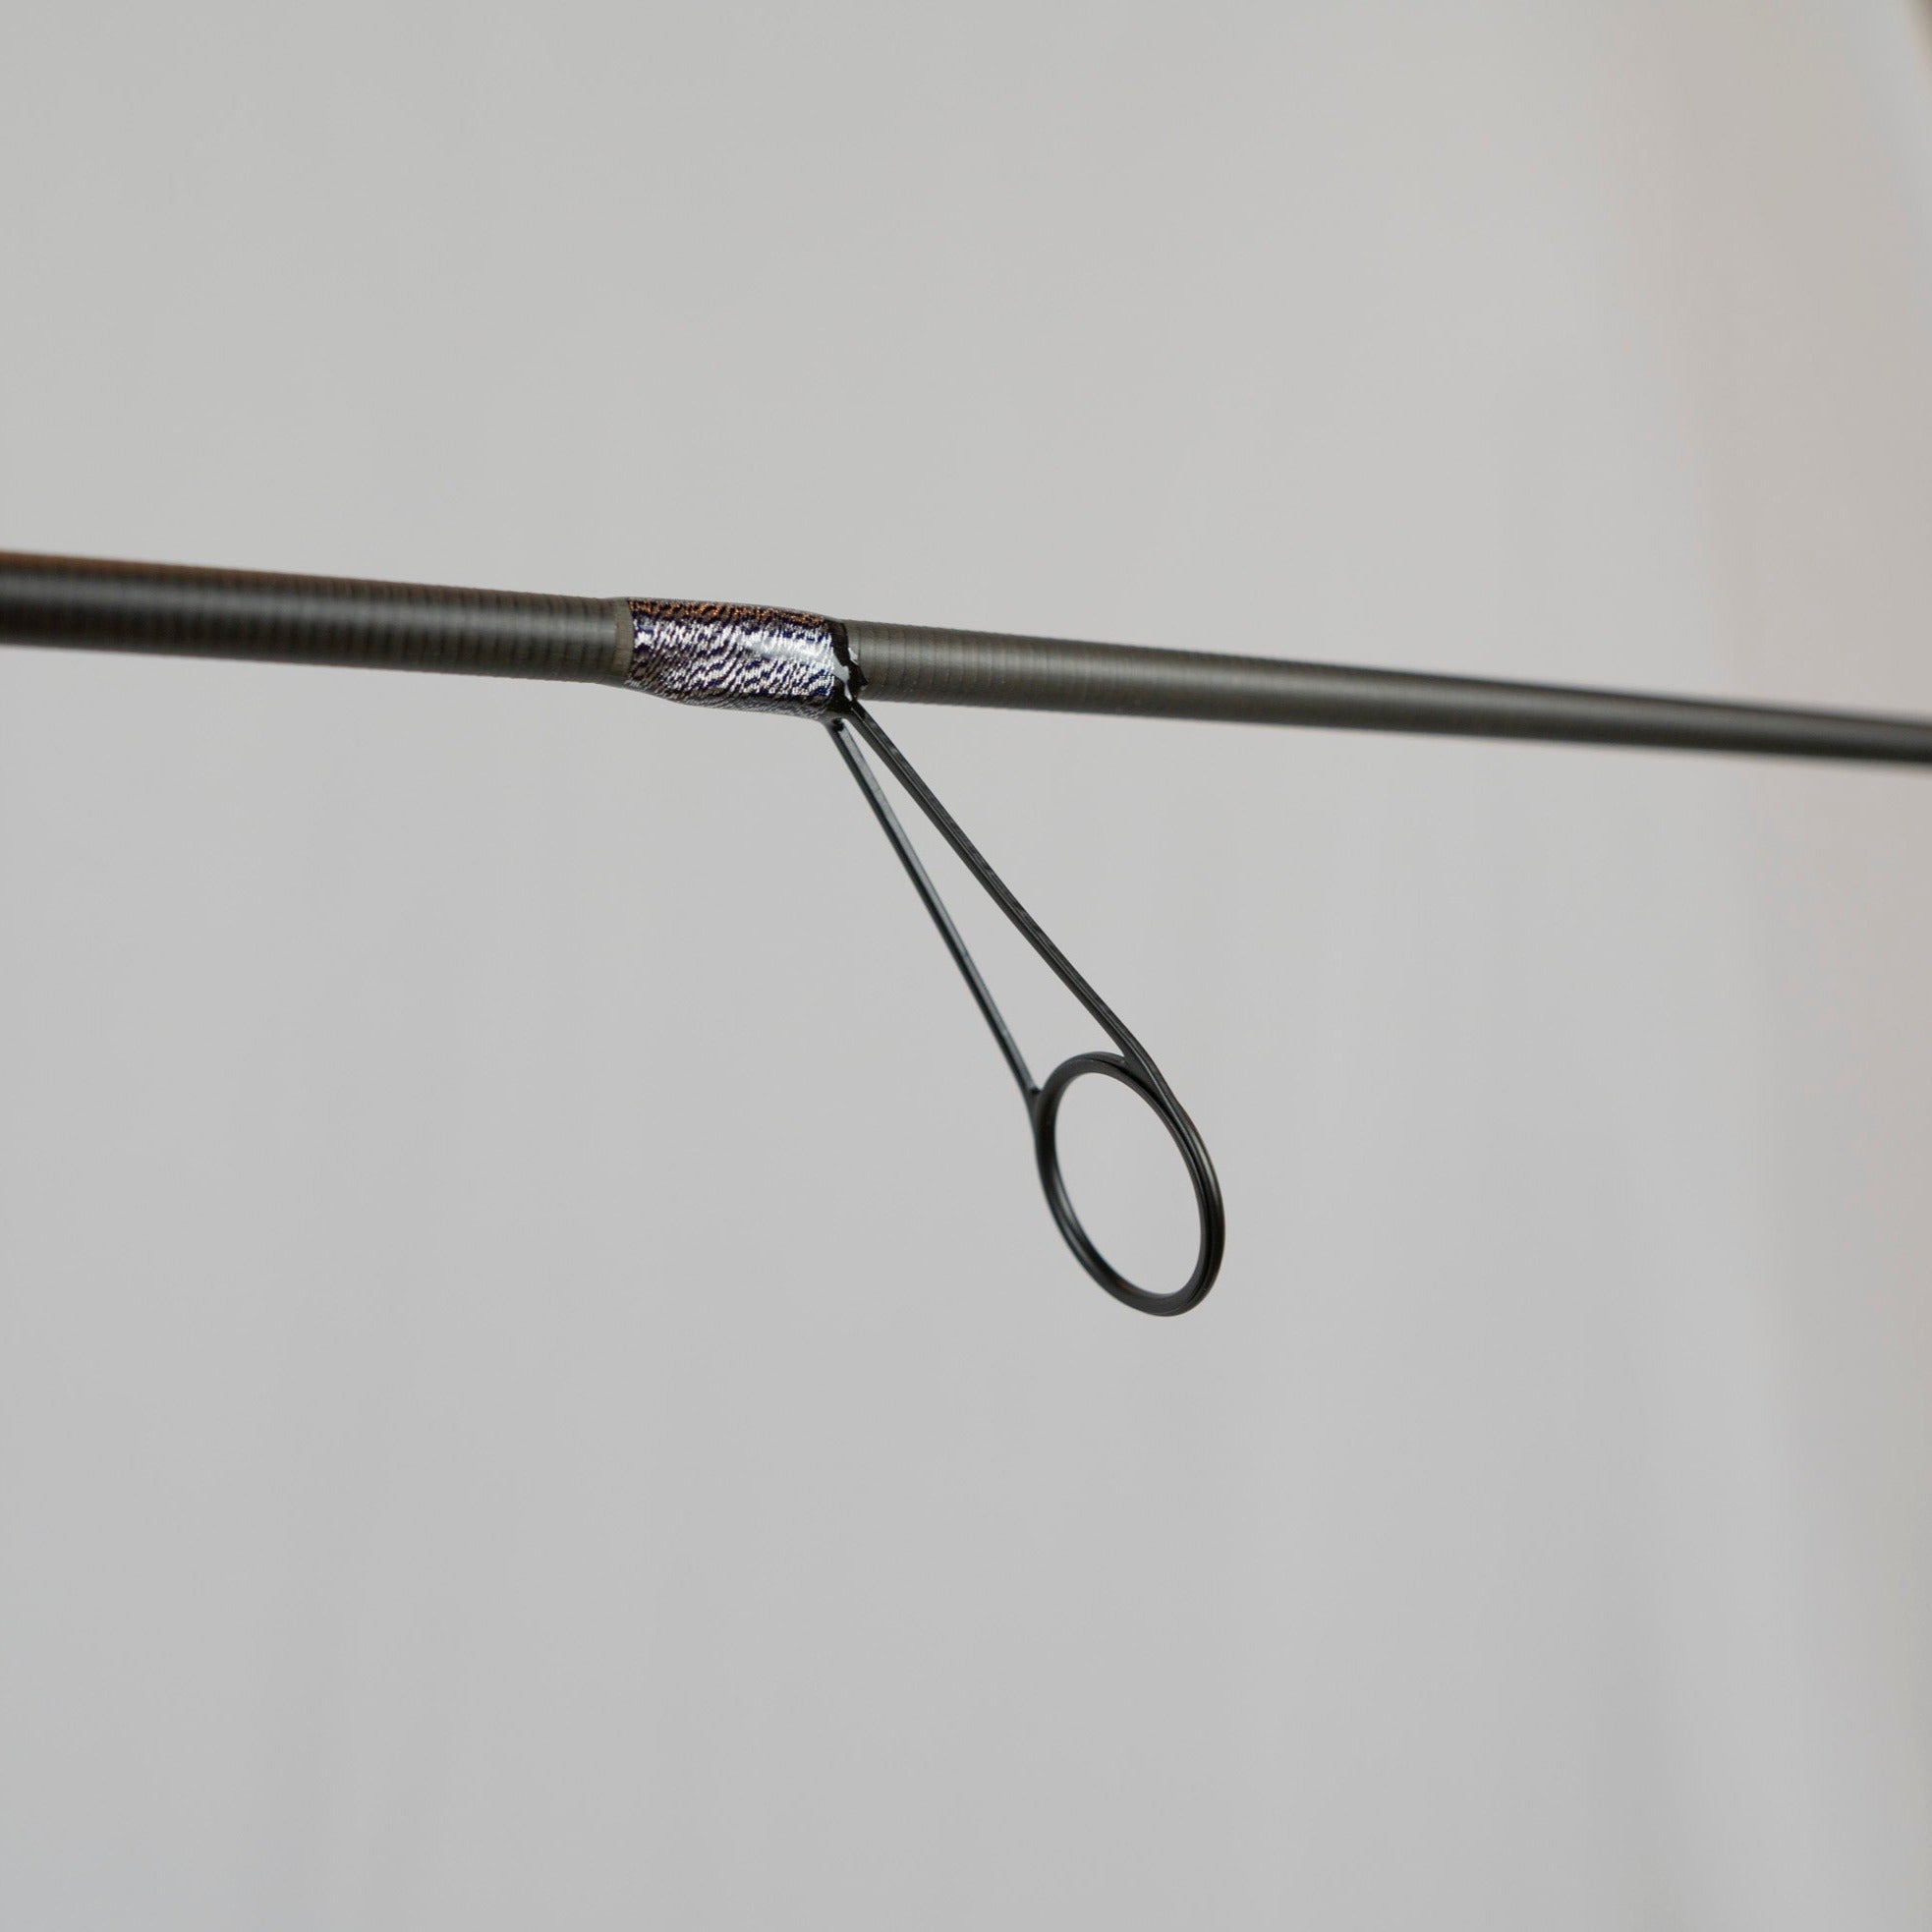 Crappie Fishing Rod – KISTLER Fishing